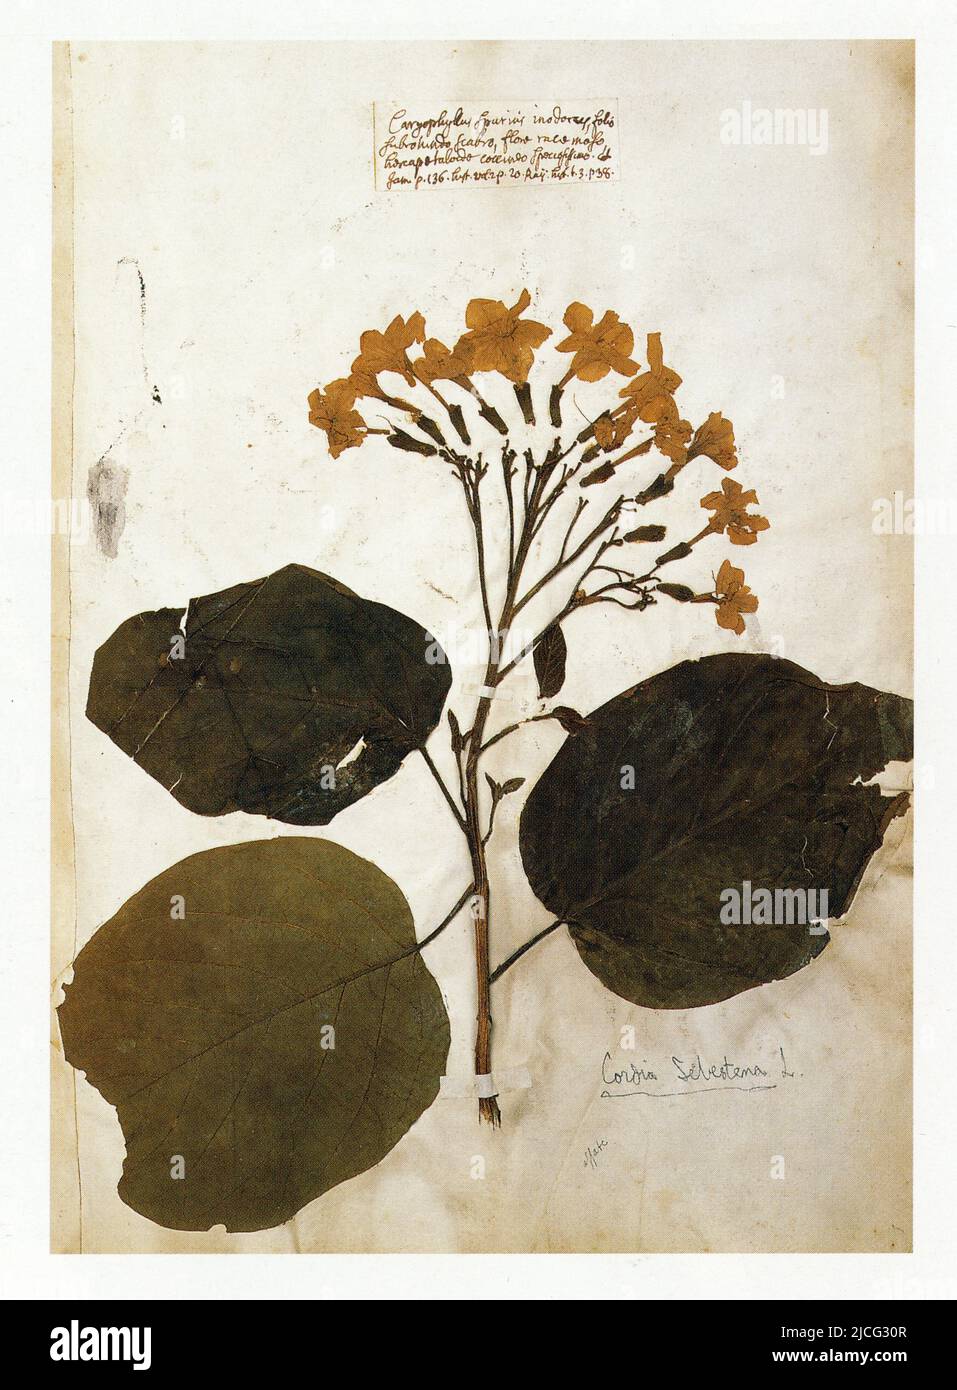 Caryophyllus spurius inodorus,folio subrotundo scabro flore racemoso hexapetaloidescoccineo speciosissimo.Cordia sebestena.La cordia rouge Stock Photo